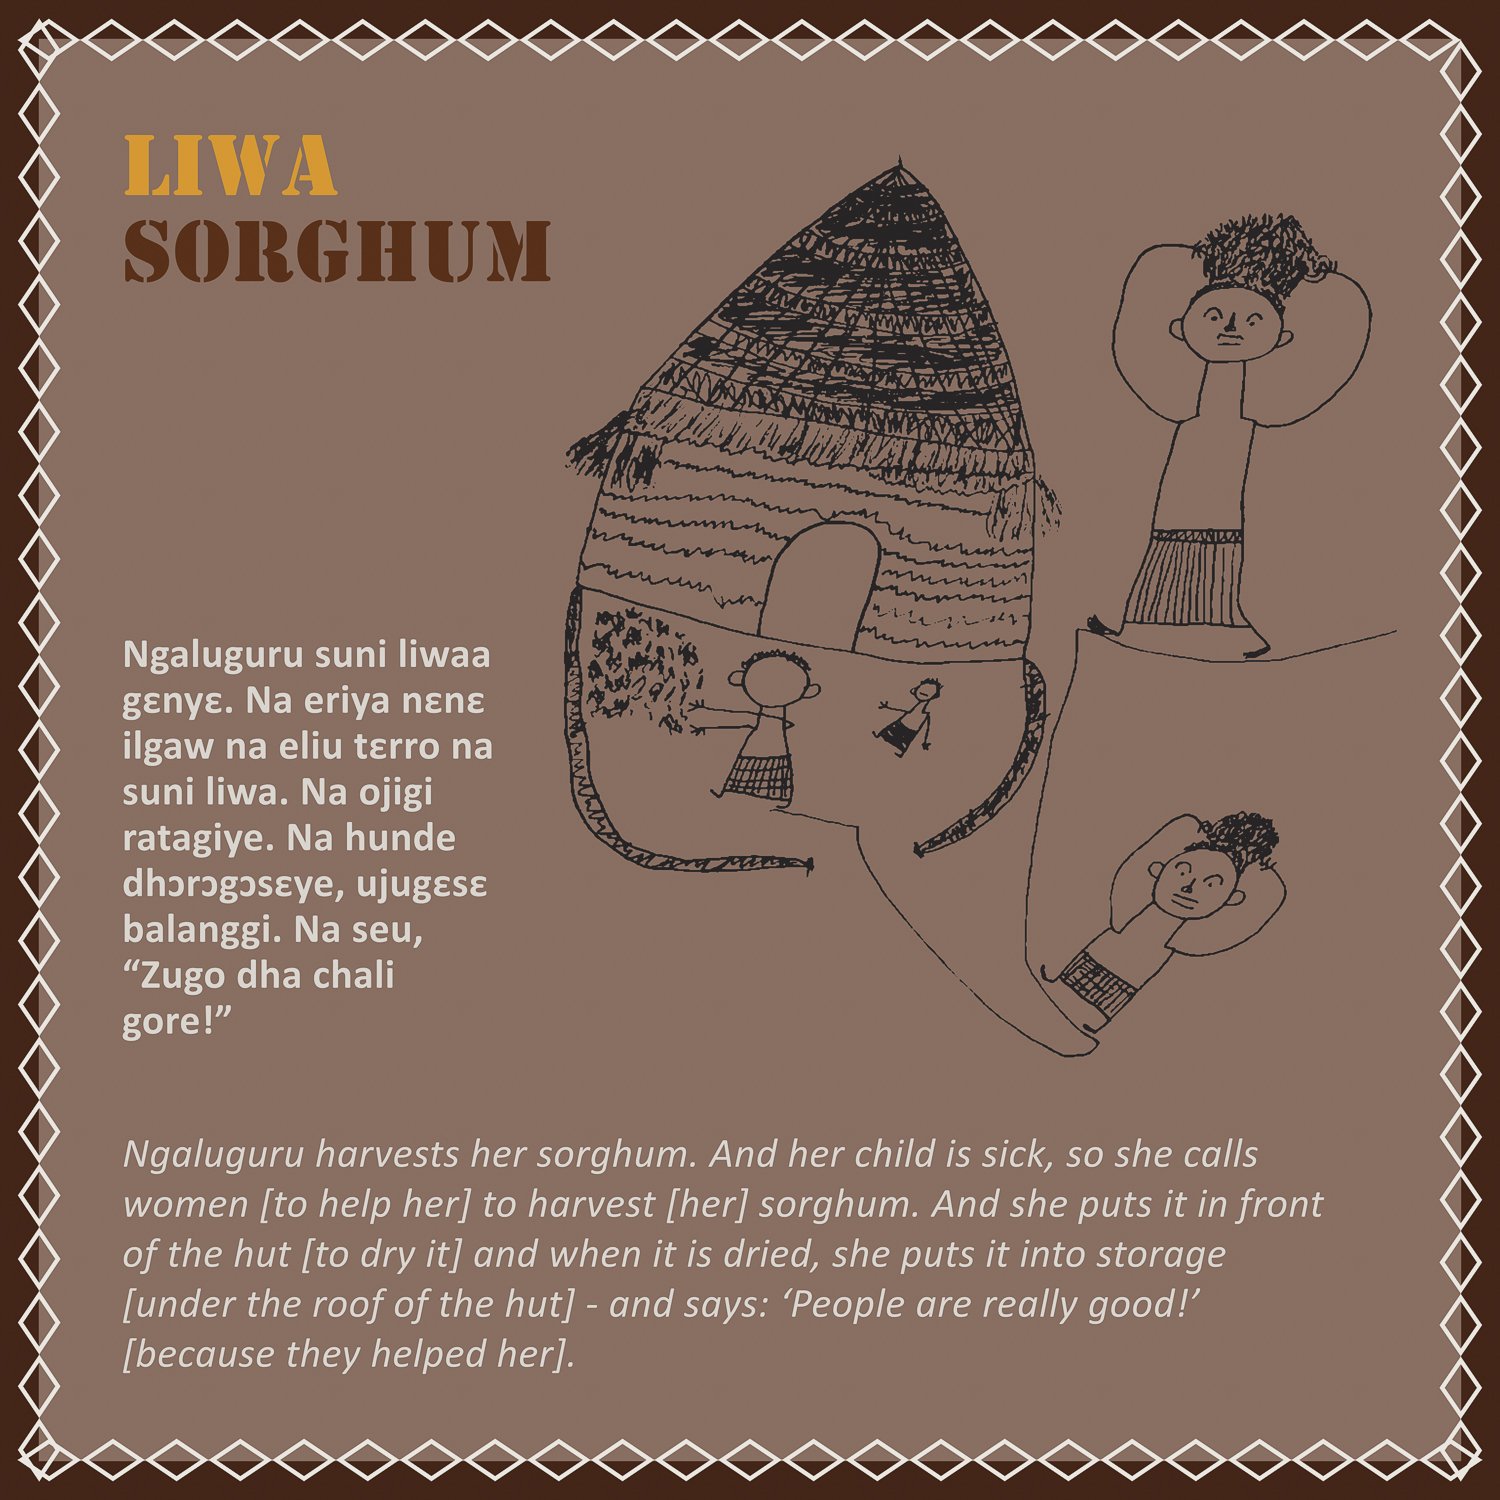 liwa = sorghum